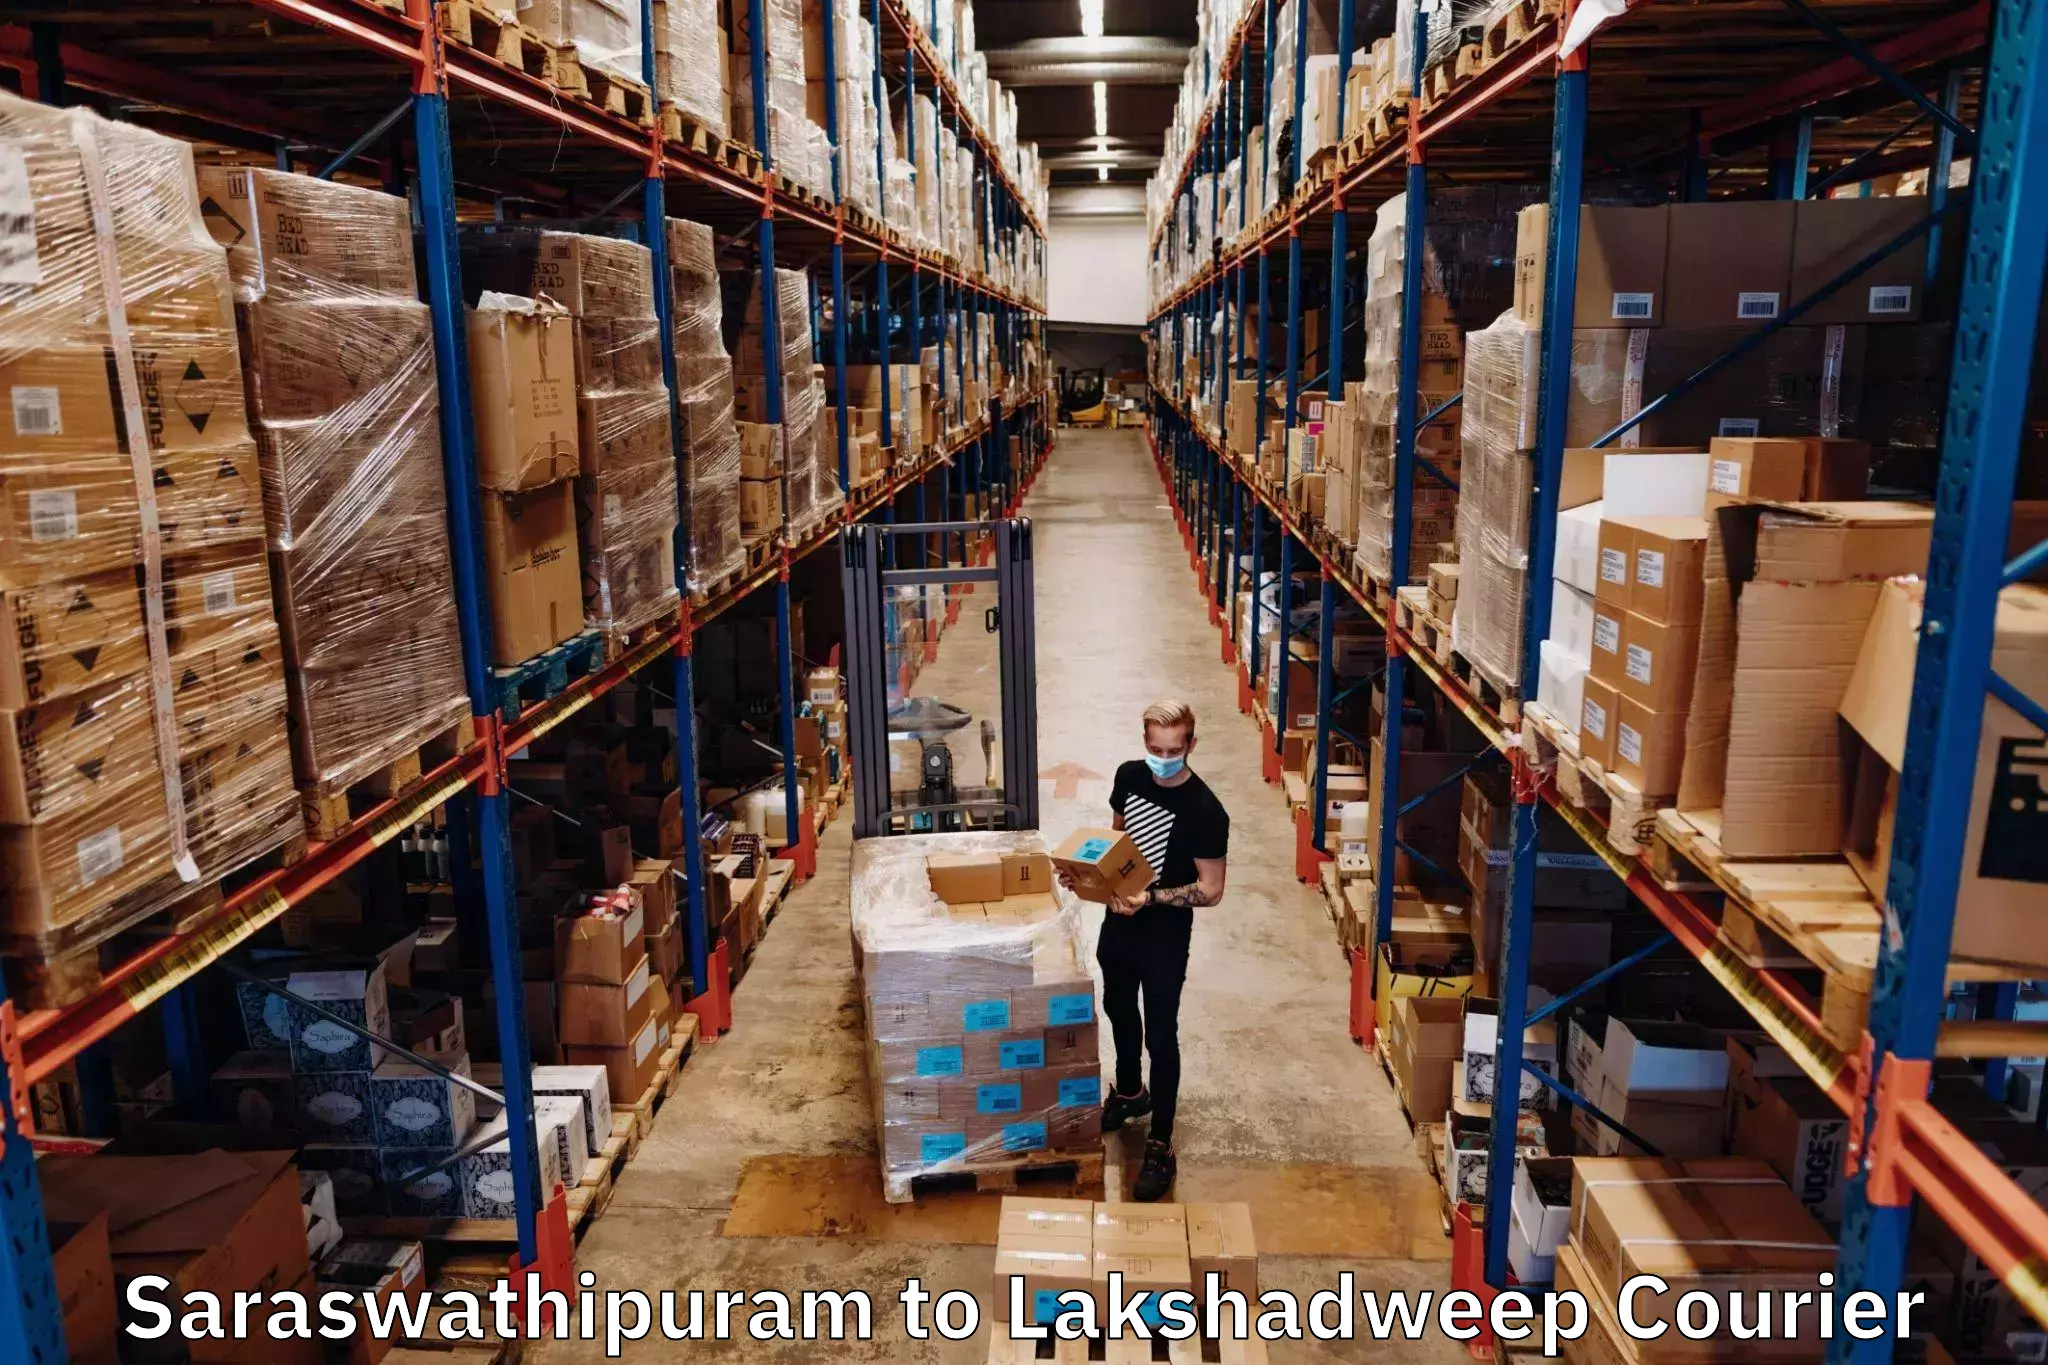 Nationwide delivery network Saraswathipuram to Lakshadweep